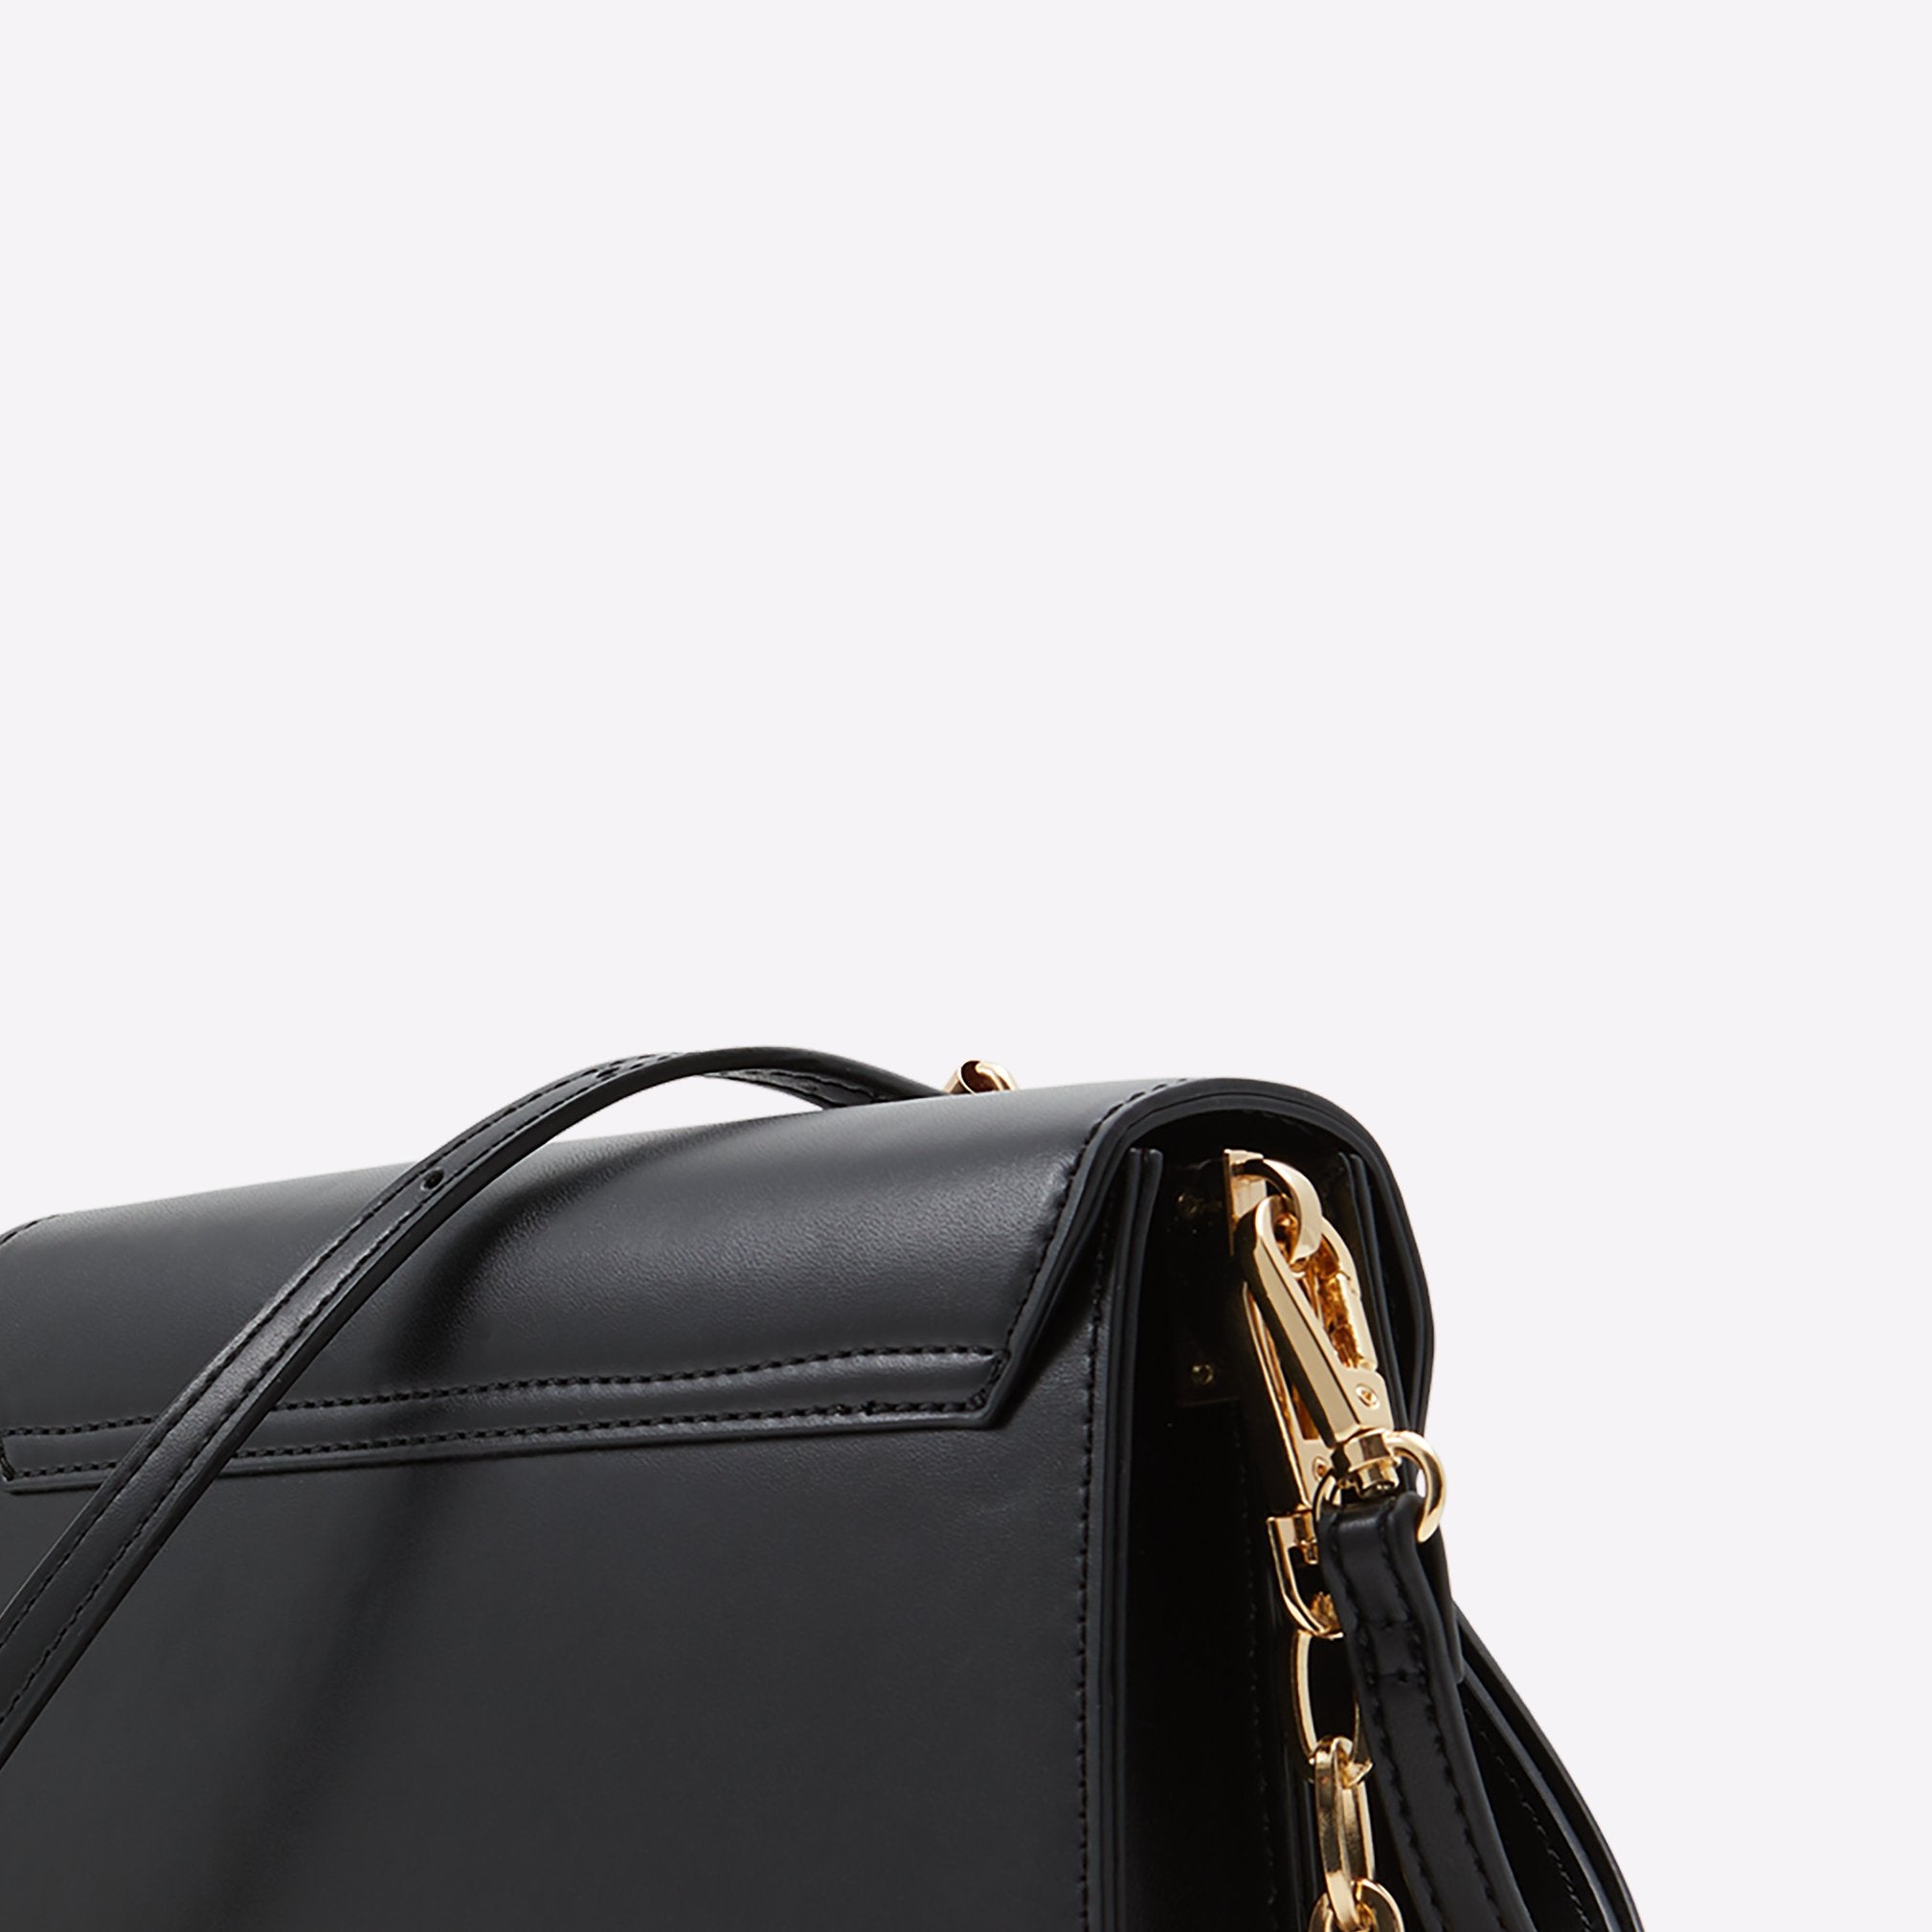 ALDO Women's Lastours Clutch Bag, Black: Handbags